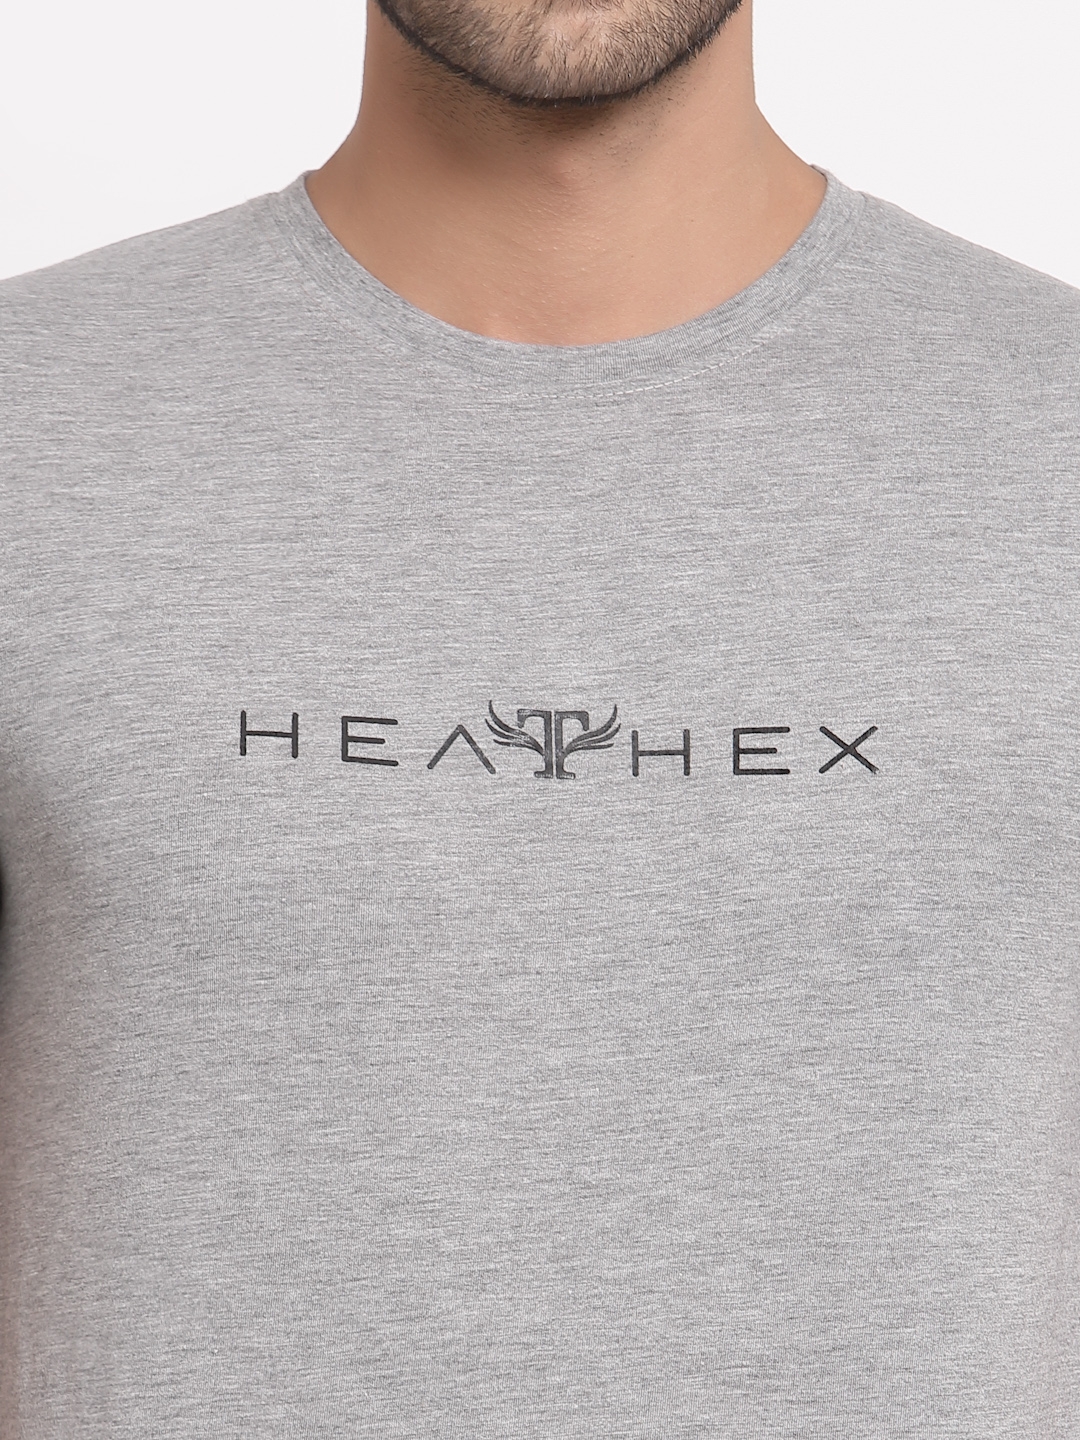 HEATHEX | HEATHEX Cotton Blend Printed Half Sleeve Light Grey T-Shirt for Men 3